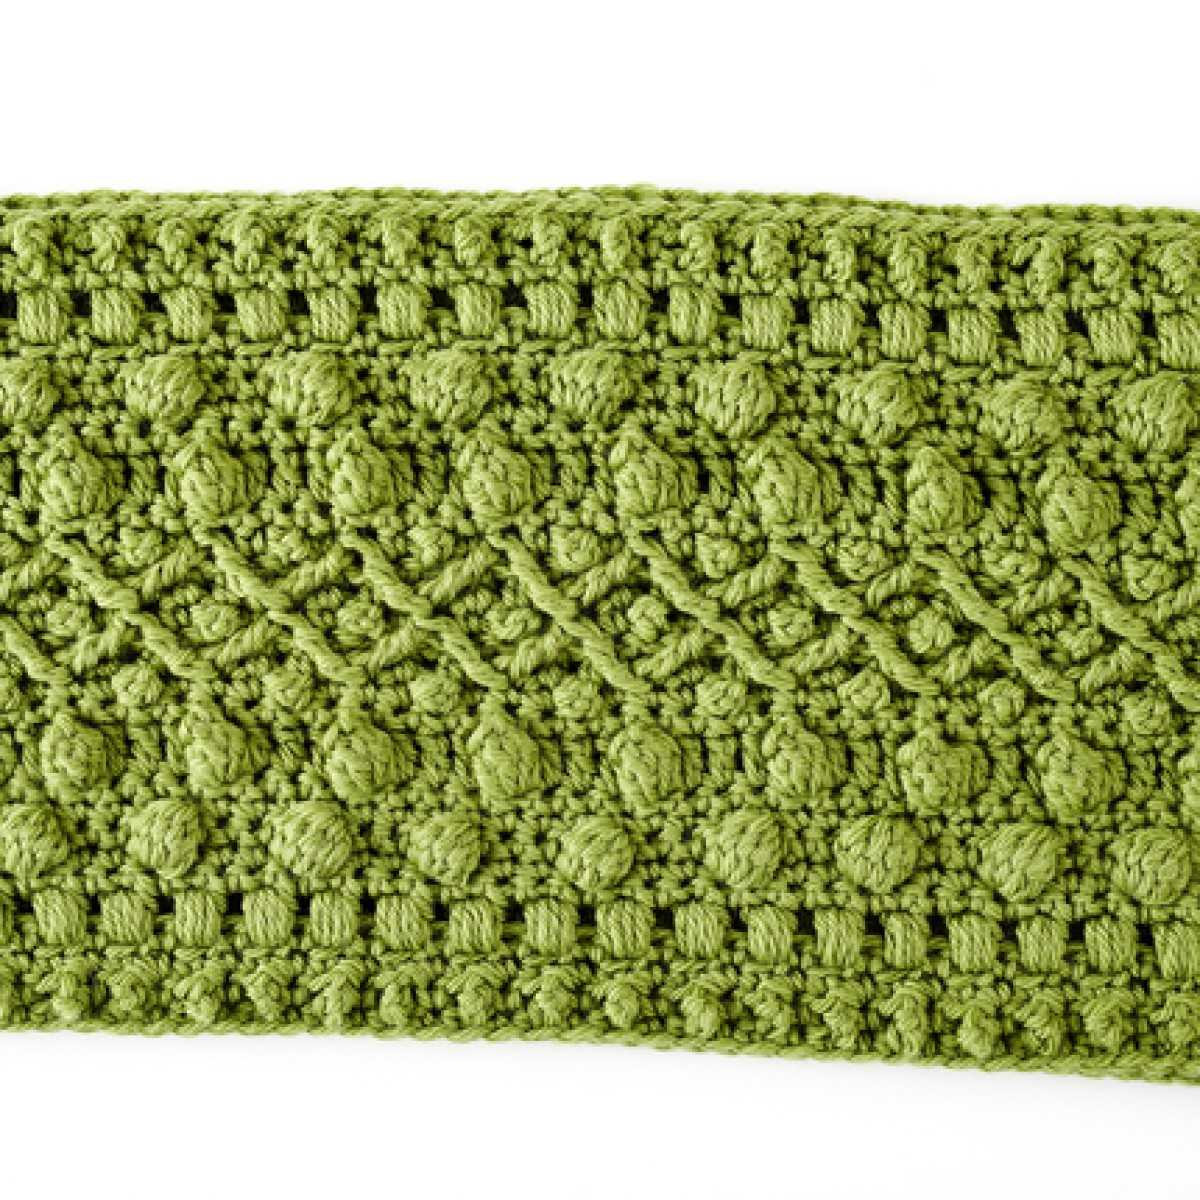 Puff Stitch Scarf Crochet Pattern 7 Next Level Crochet Stitches Youll Love